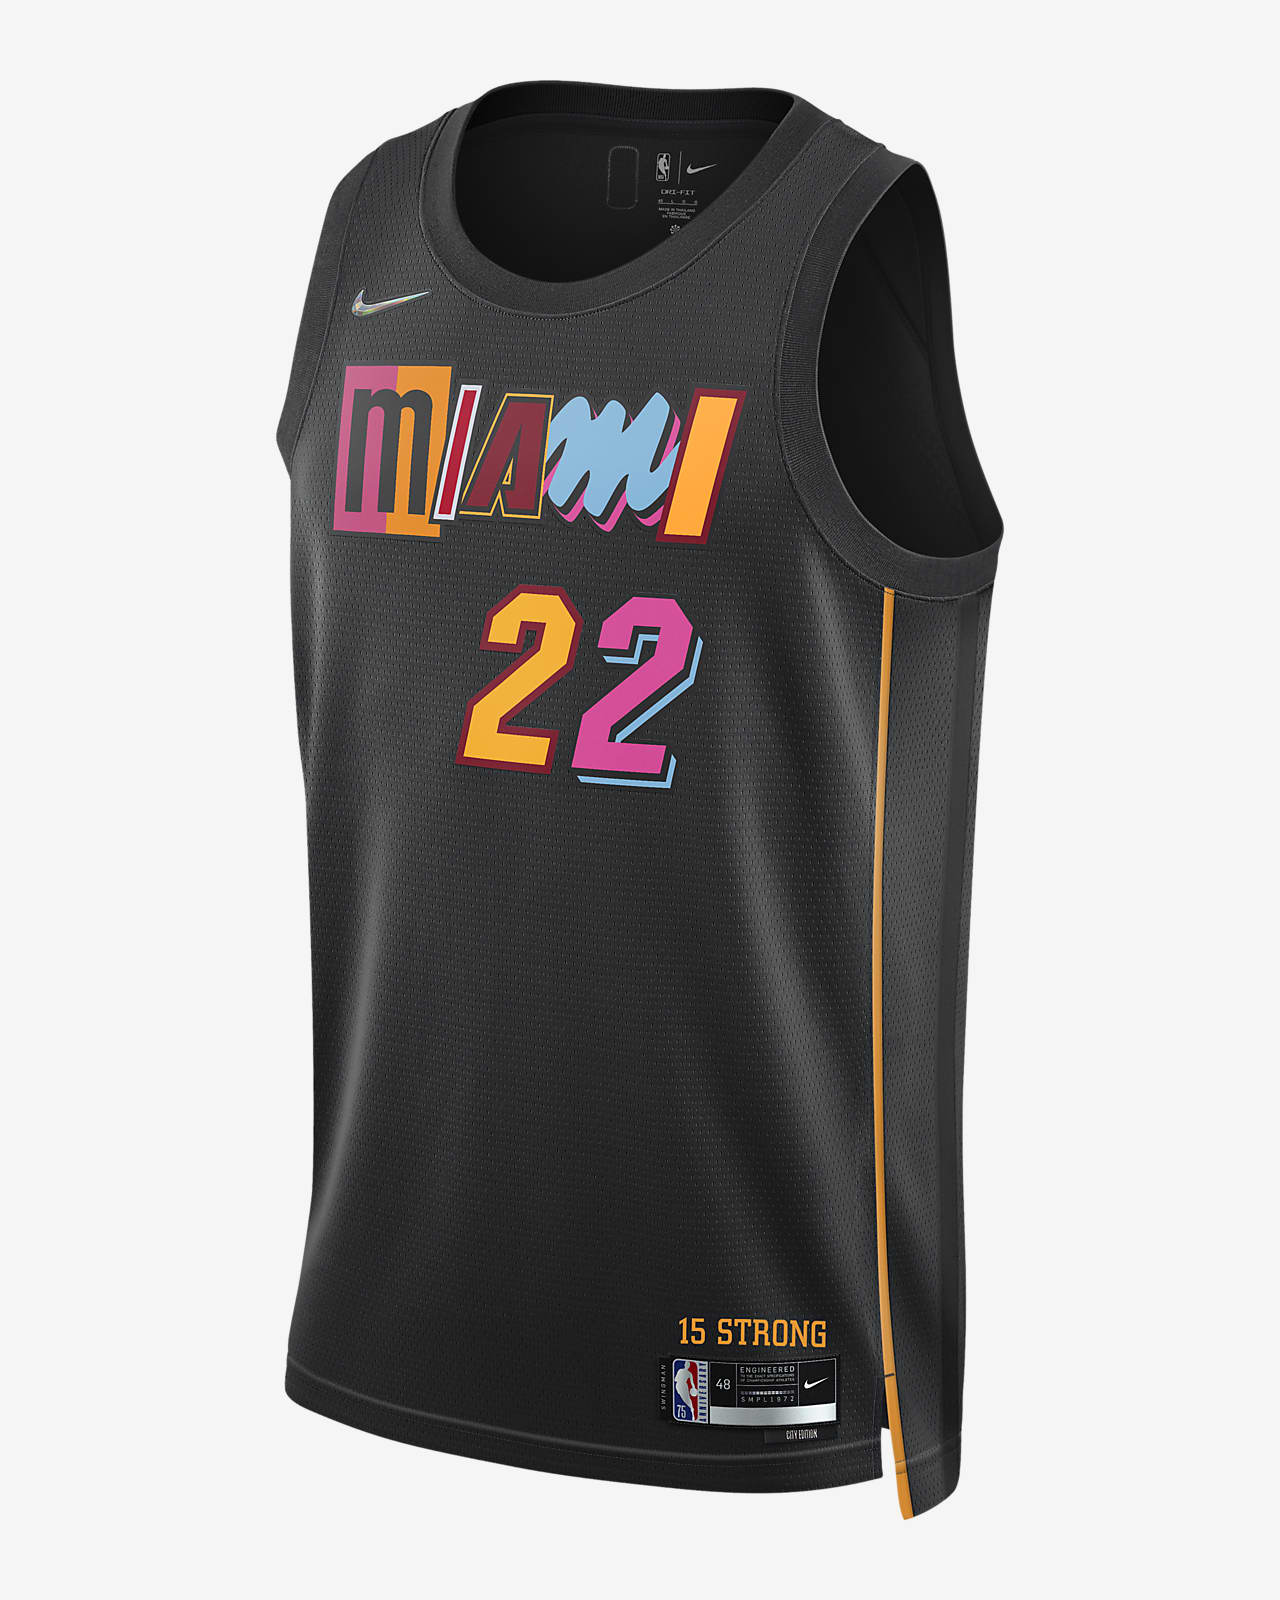 Miami Heat City Edition Nike Dri-FIT NBA Swingman Jersey